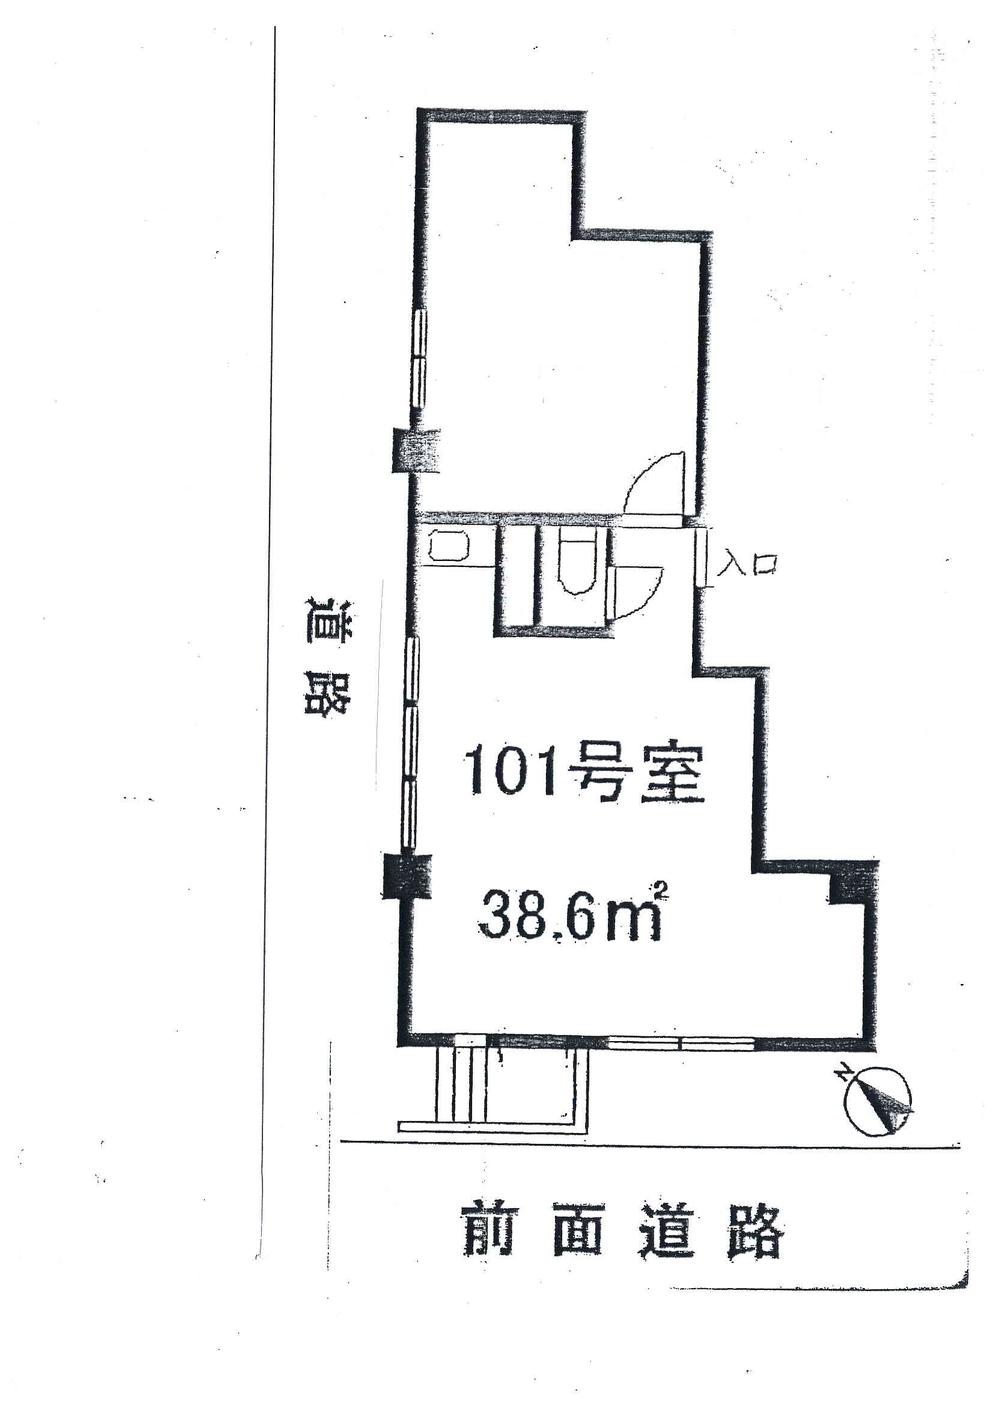 Floor plan. Price 27 million yen, Occupied area 36.31 sq m